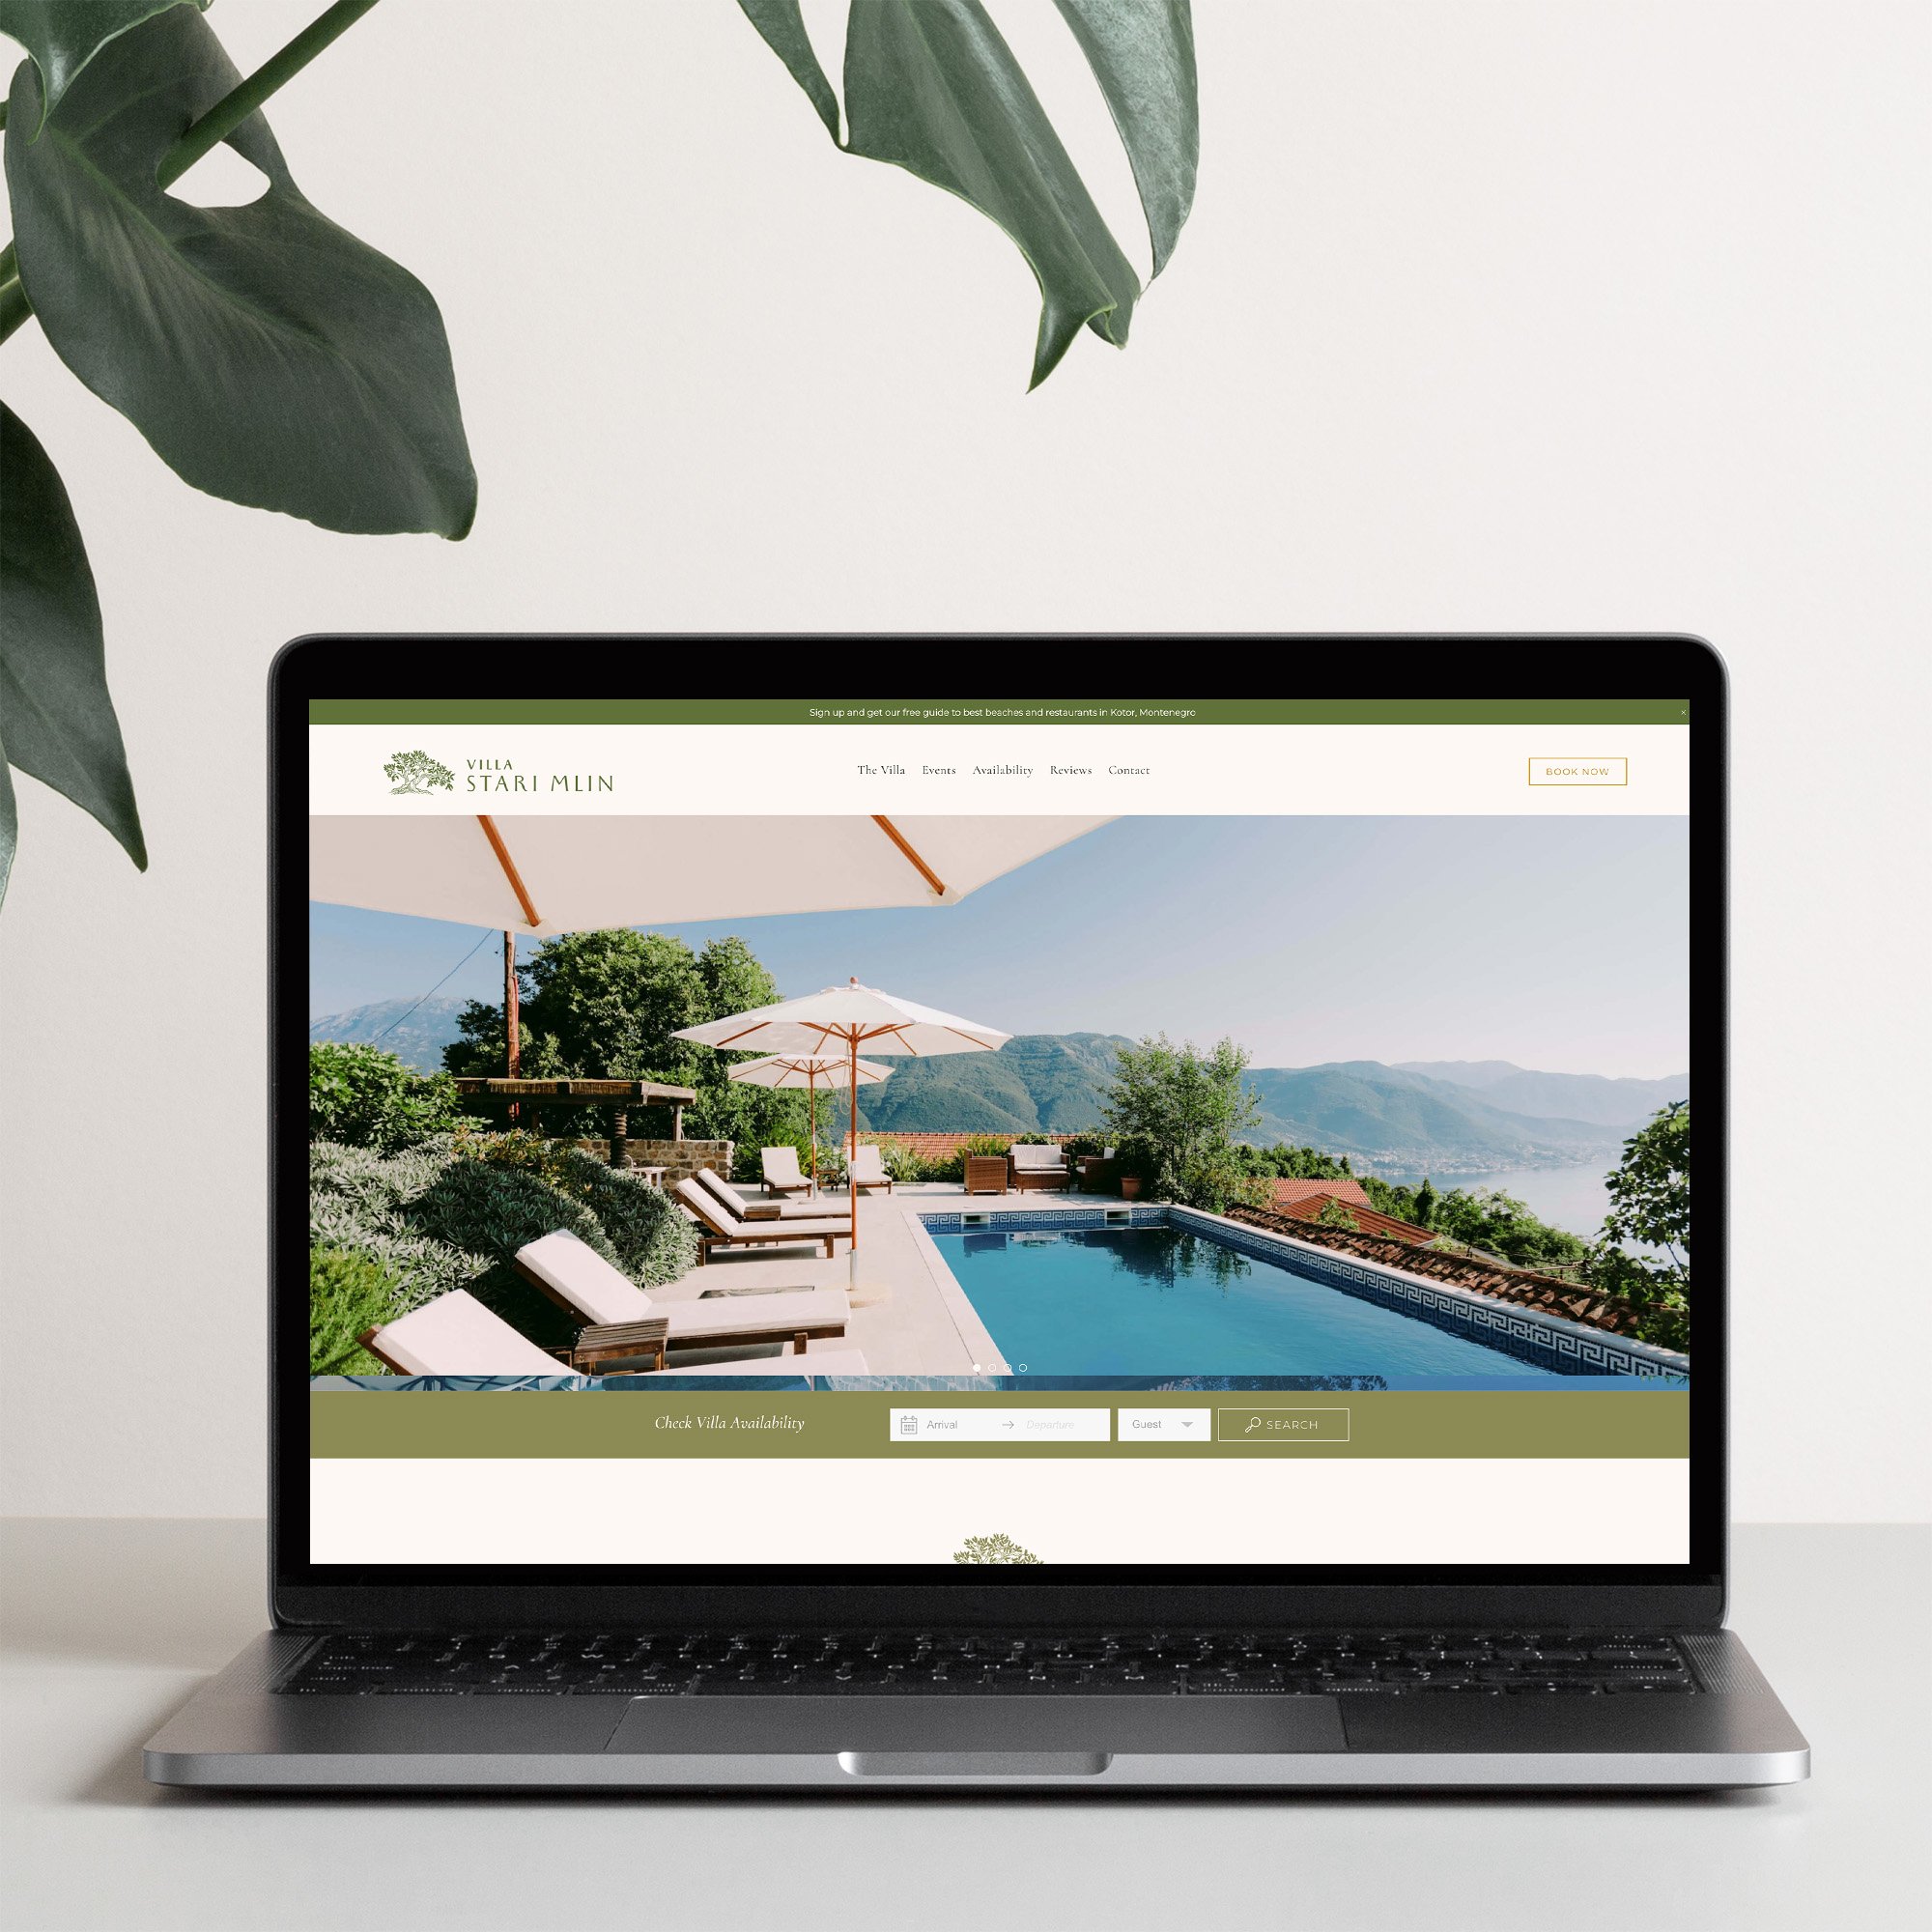 Luxury holiday villa website design